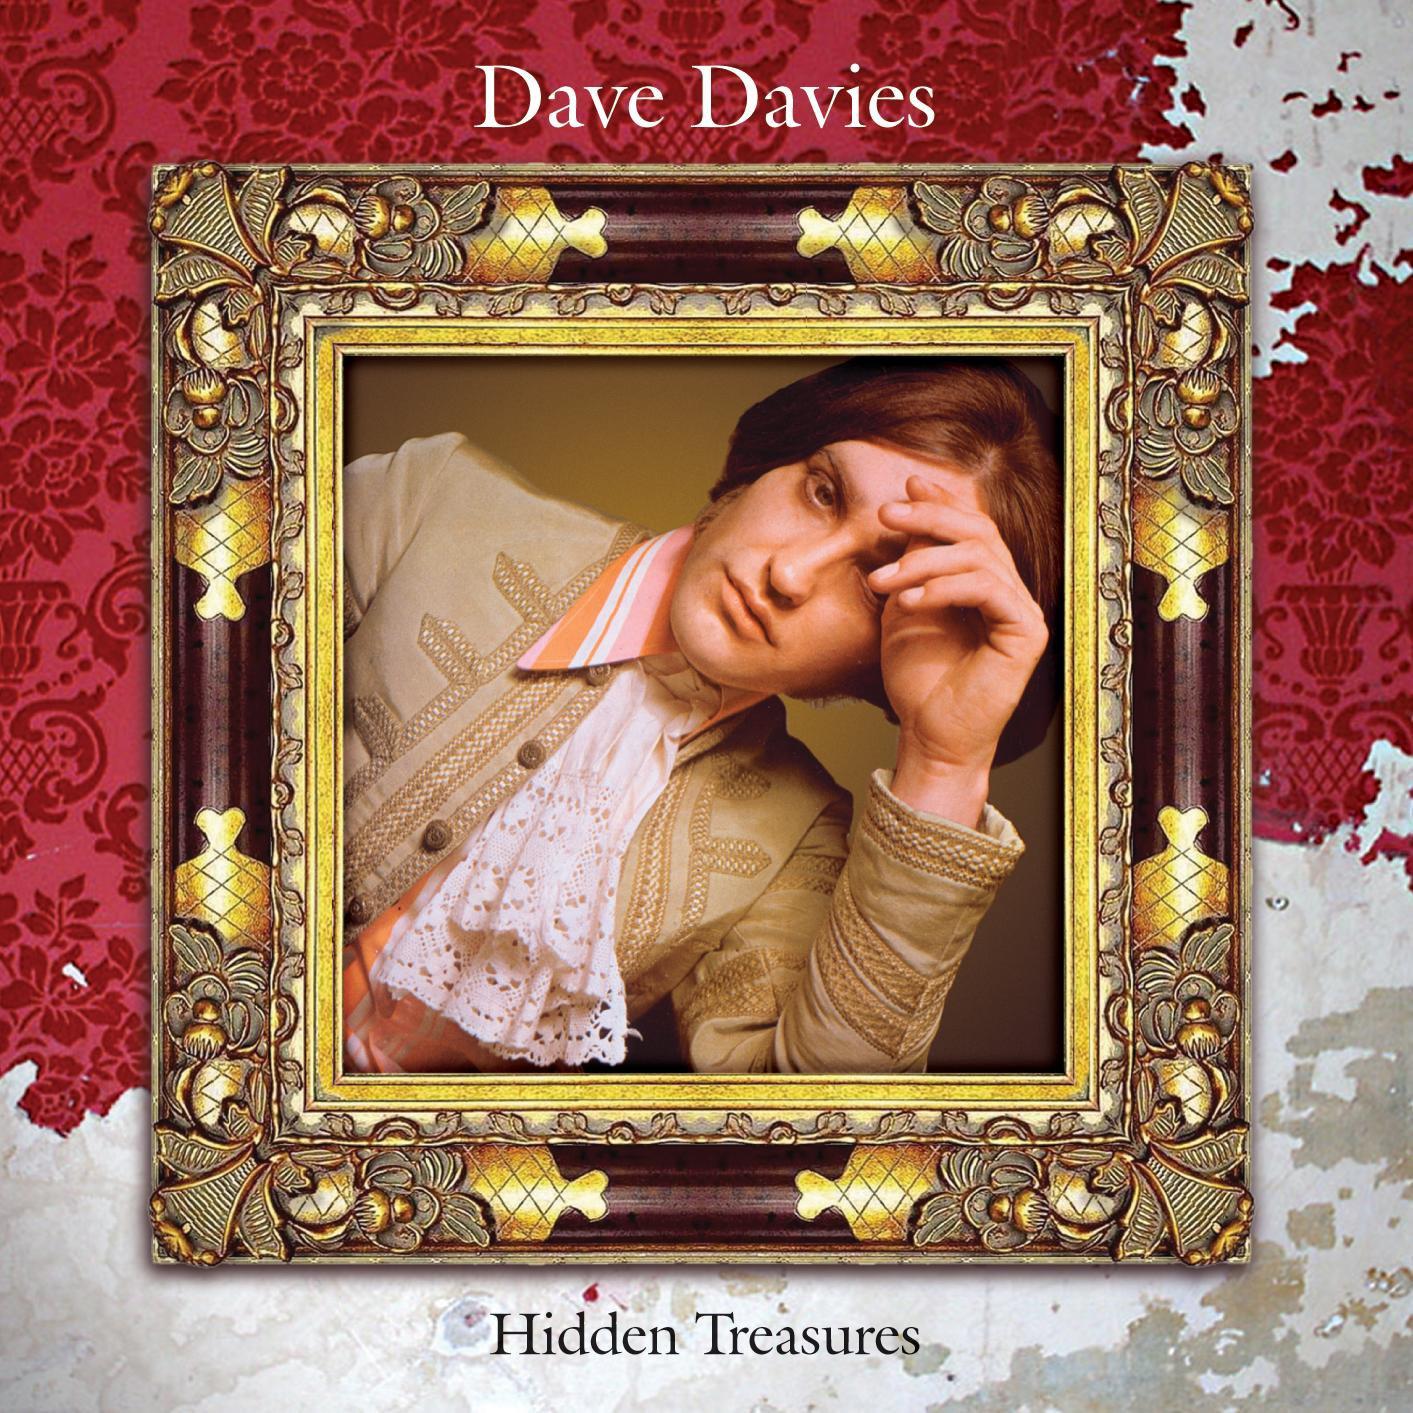 Dave Davies - Do You Wish to Be a Man